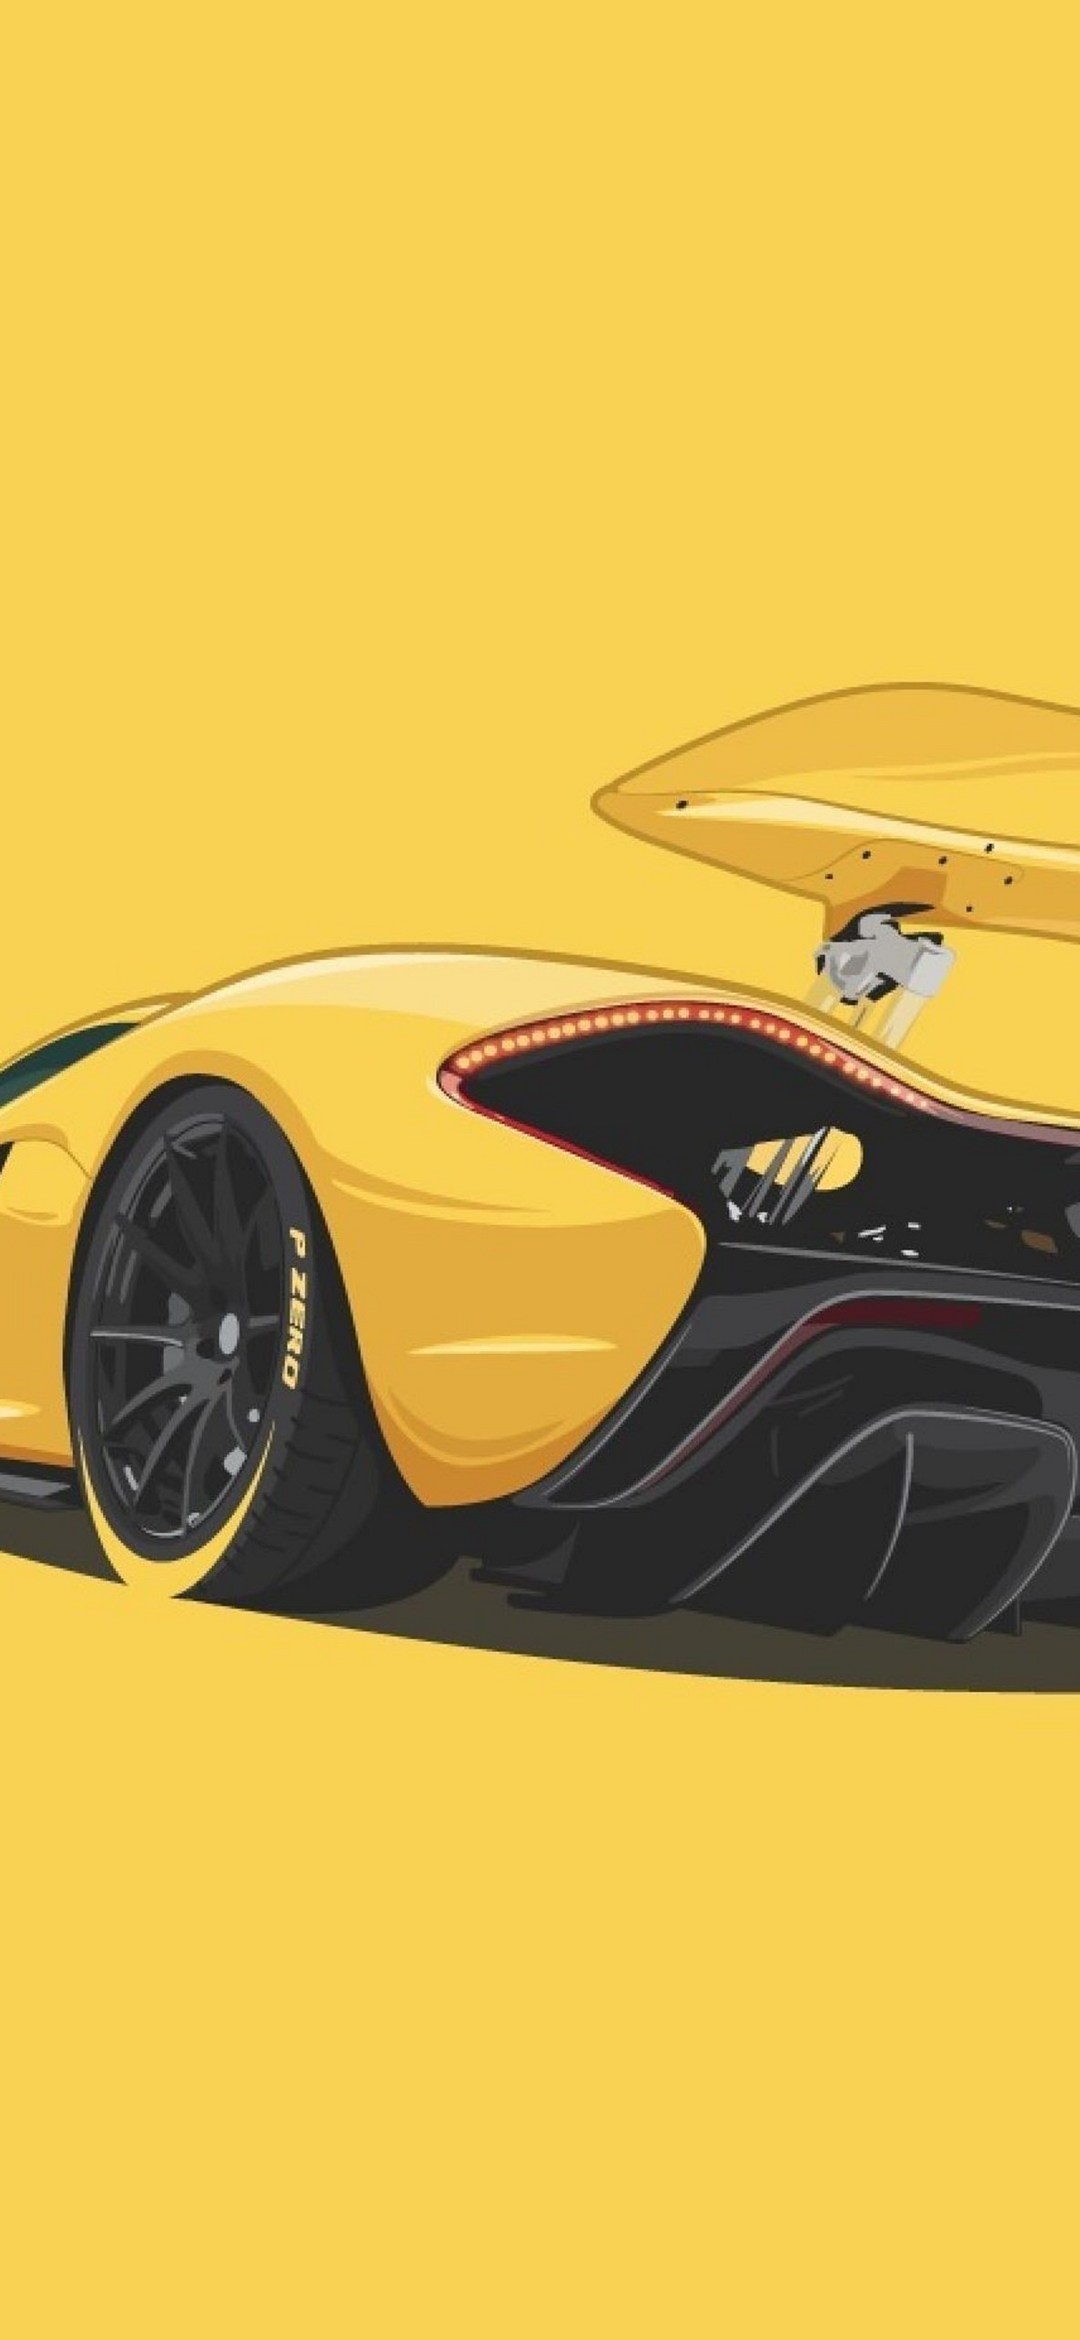 Cool Car Illustration Oppo Reno A Android スマホ壁紙 待ち受け スマラン